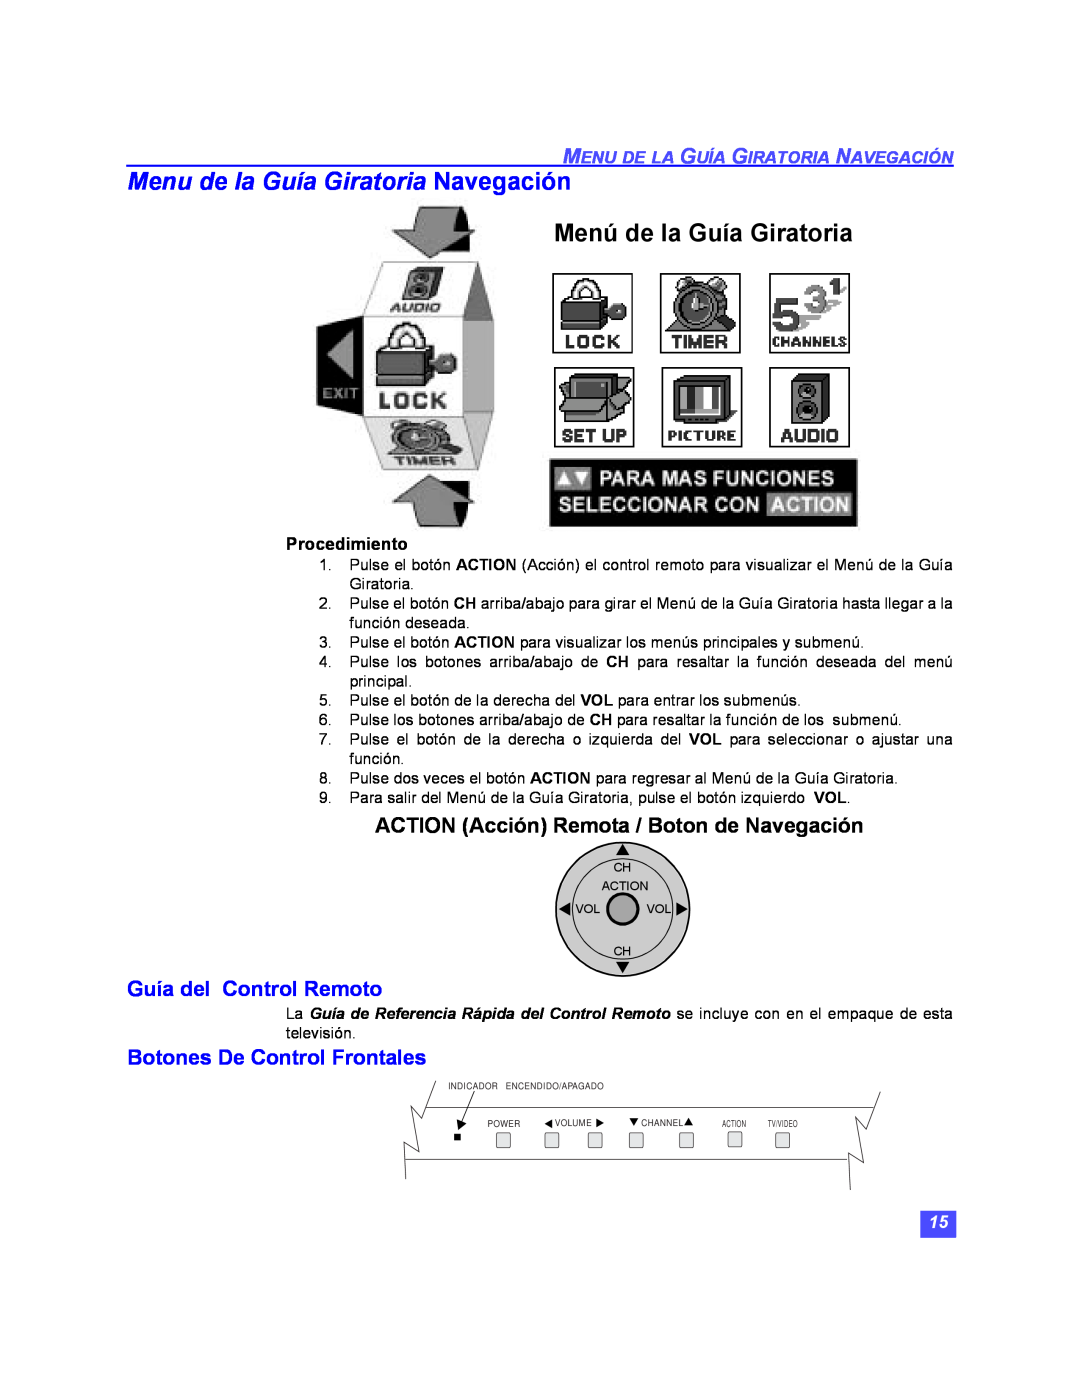 Panasonic PT-47WX51 Menu de la Guía Giratoria Navegación, ACTION Acción Remota / Boton de Navegación, Procedimiento 